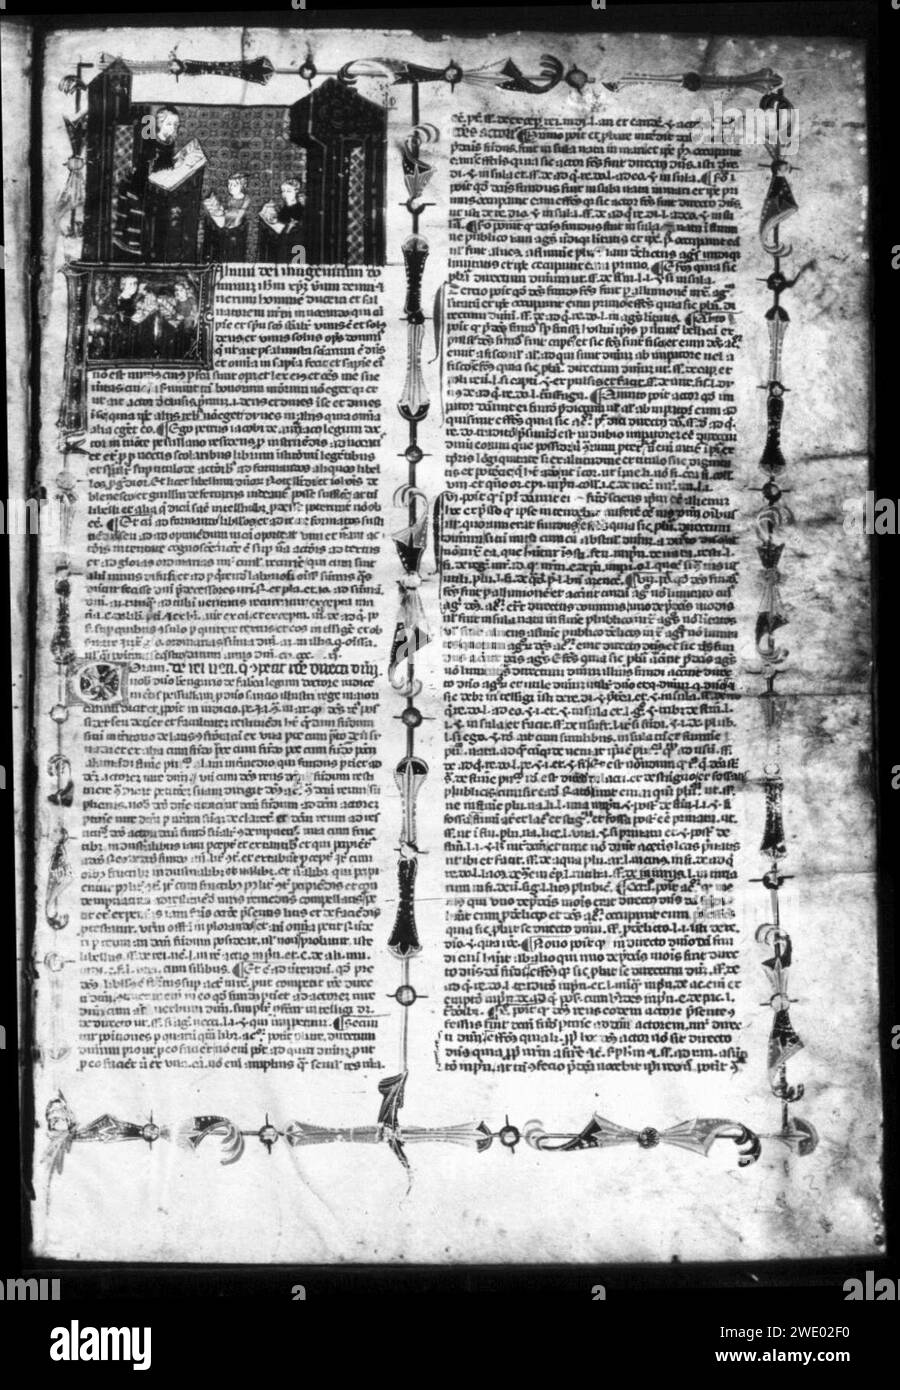 Ailly, Pierre d' – Toledo, Biblioteca de la Catedral de Toledo, Manuscritos, 40-10, secolo XIV – BEIC 10108998. Stock Photo